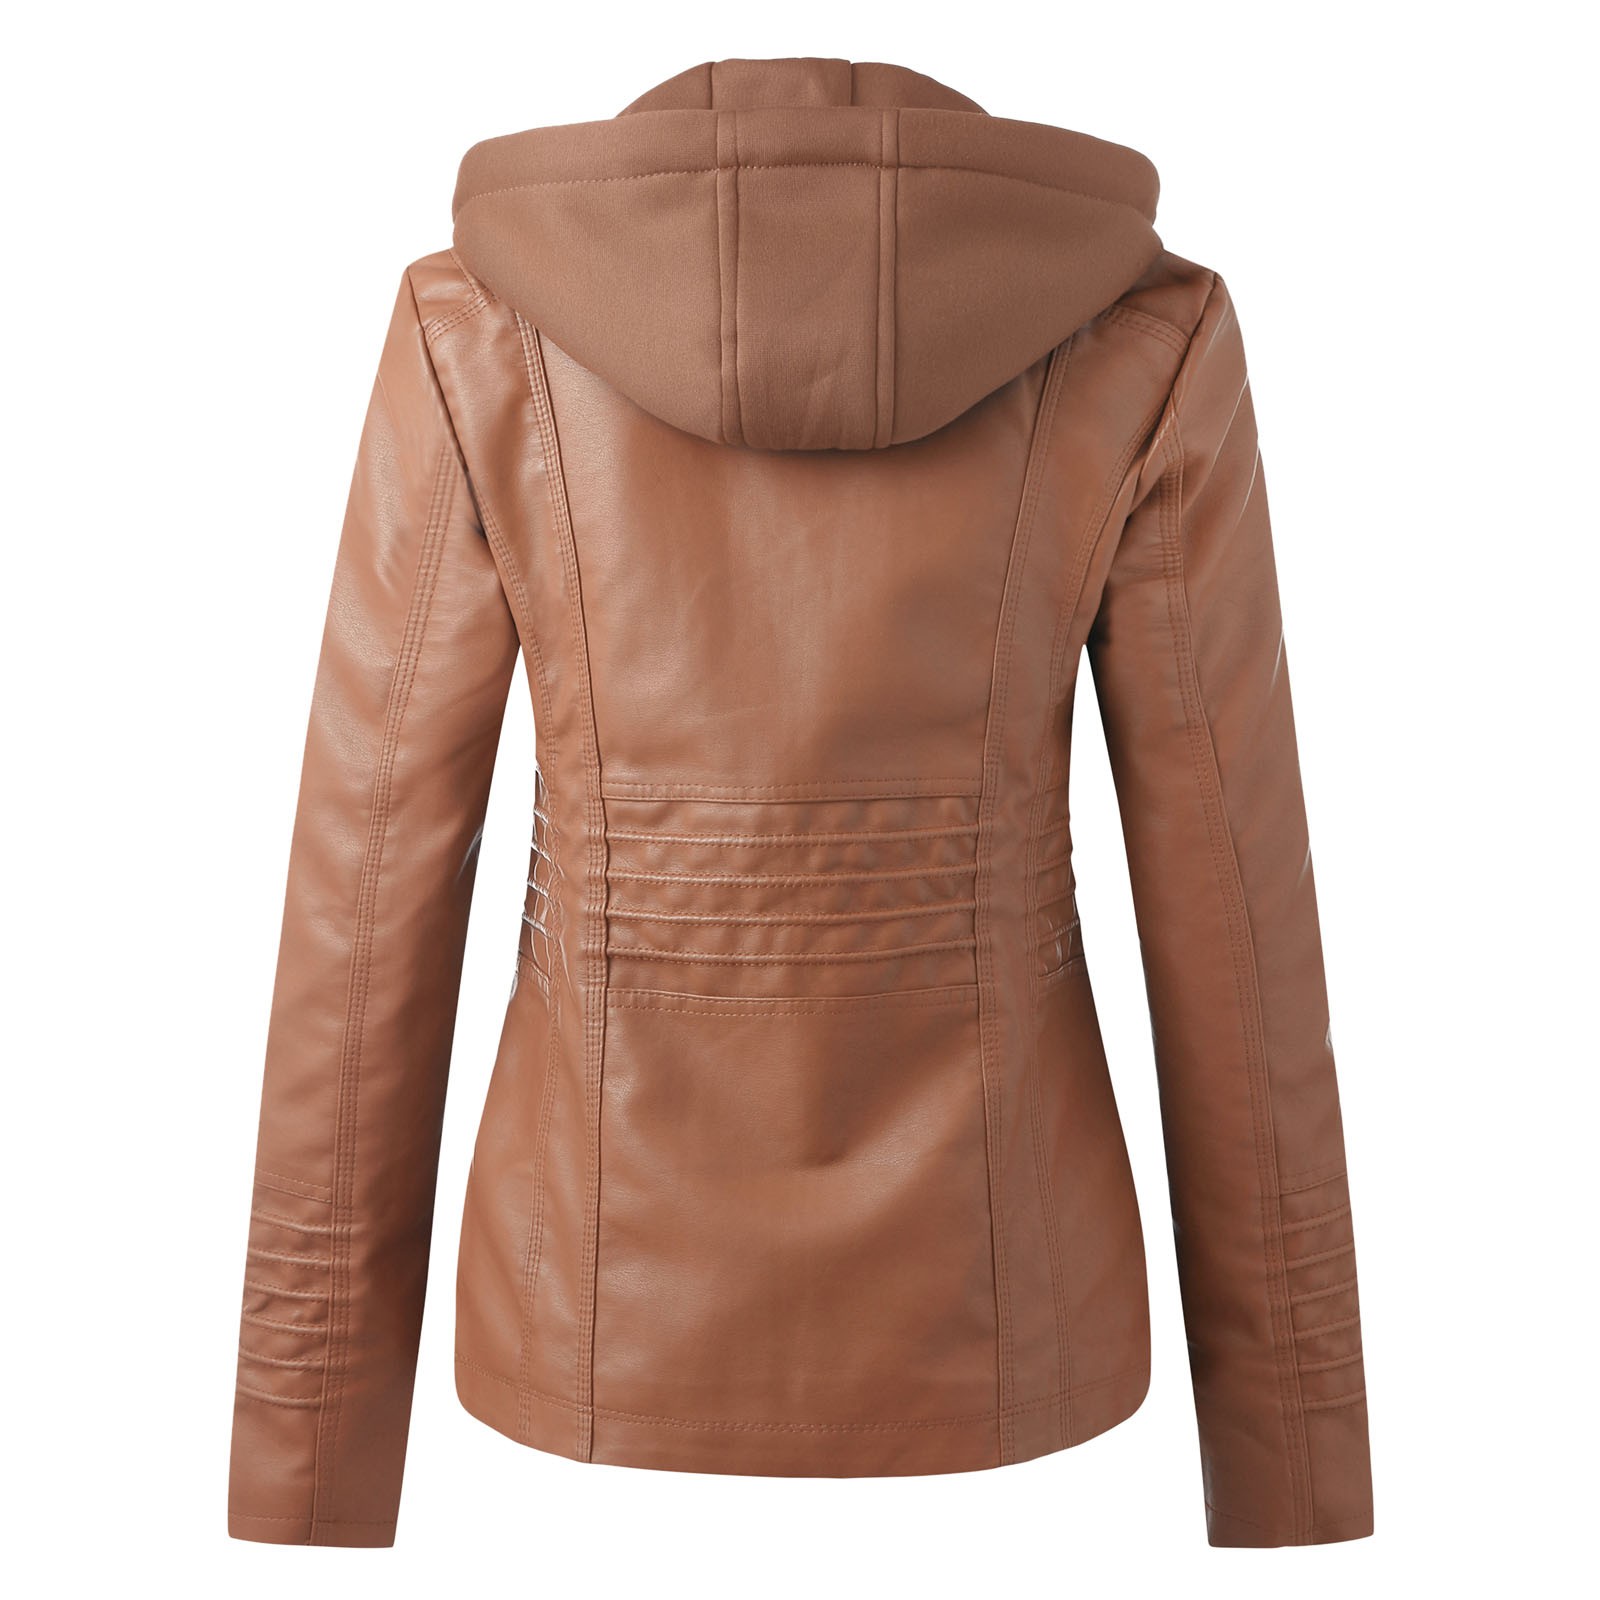 EQWLJWE Women's Slim Leather Stand Collar Zip Motorcycle Suit Belt Coat Jacket Tops - image 2 of 5